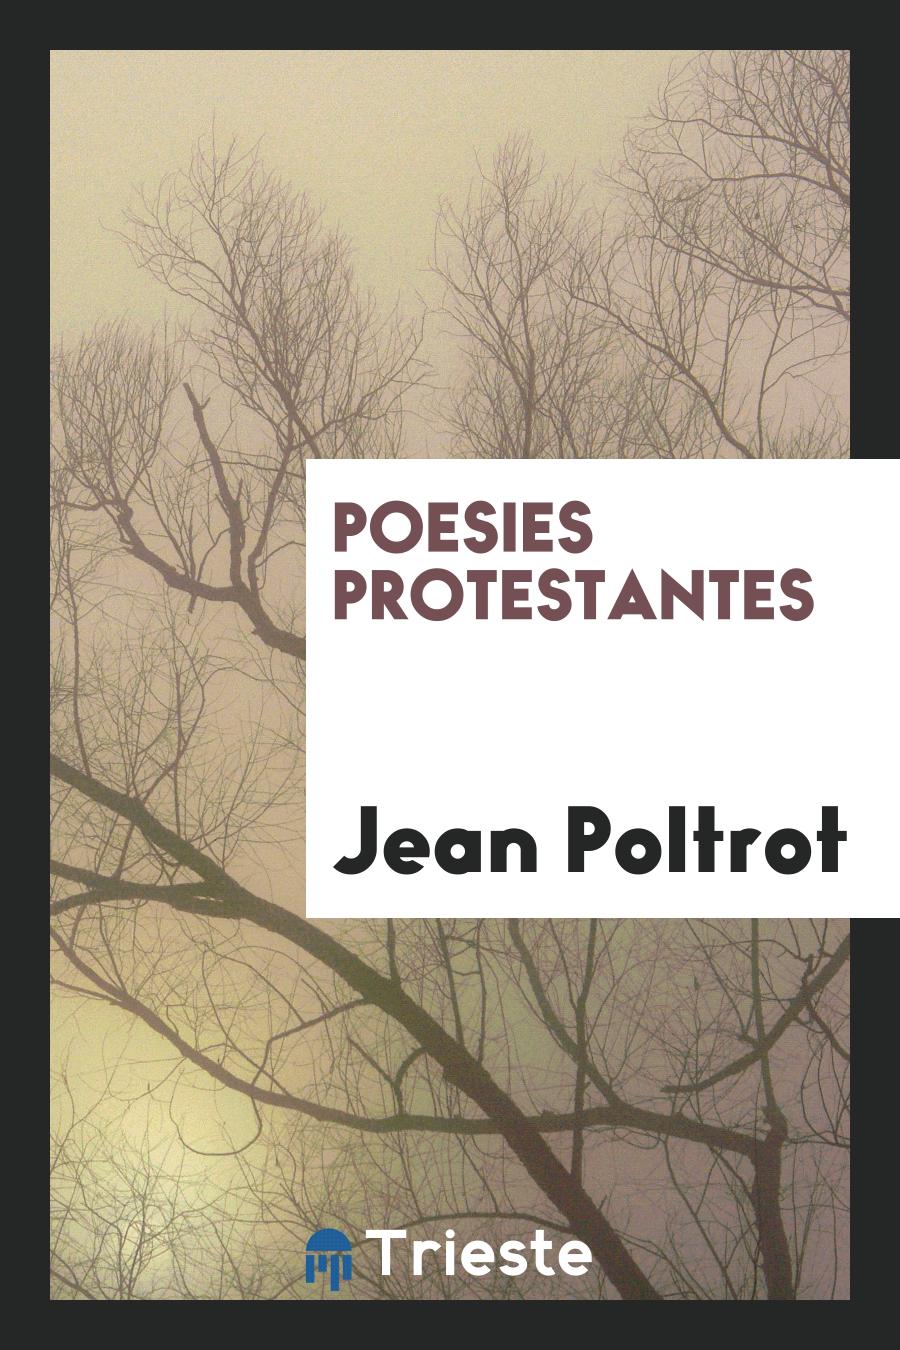 Poesies protestantes